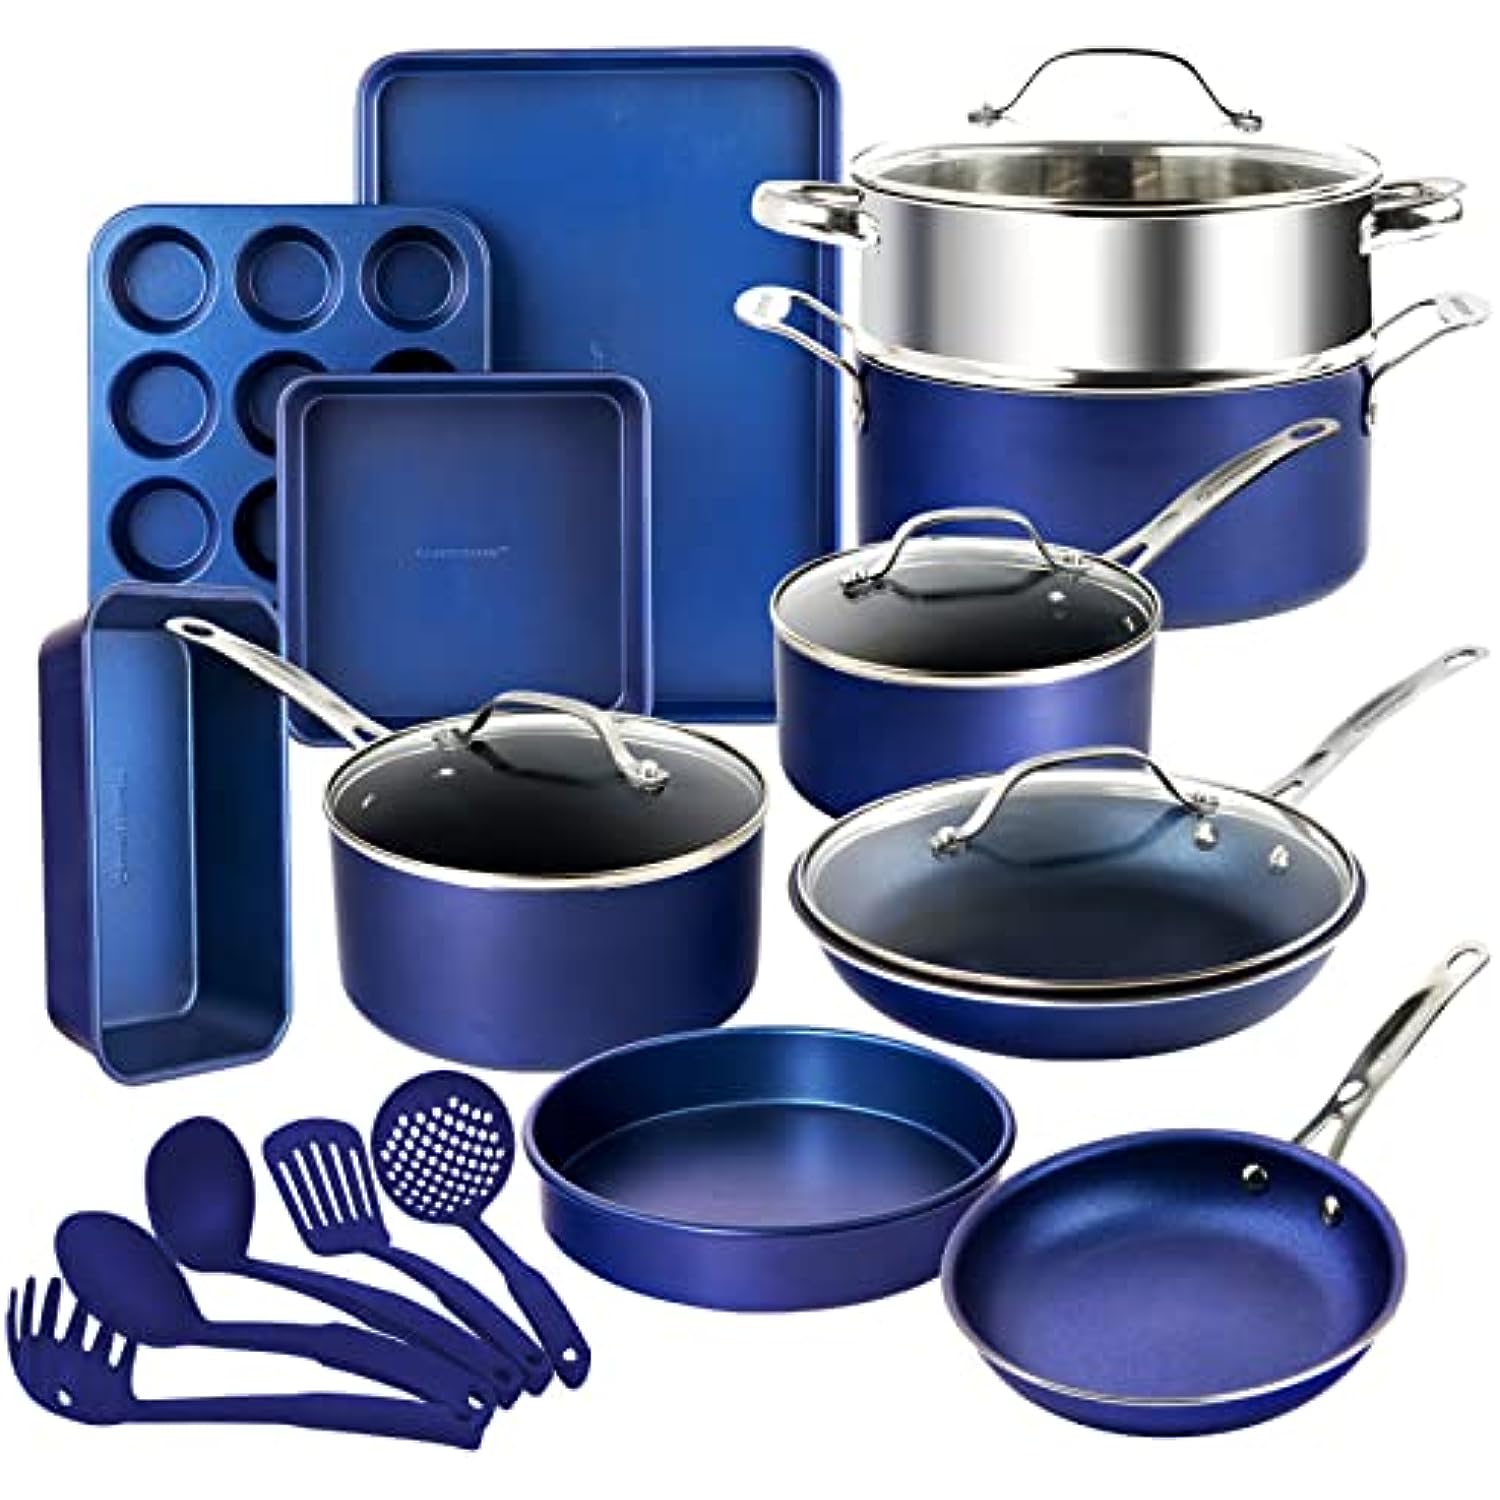 ESLITE LIFE Nonstick Granite Cookware Sets, 8 Pcs Pots and Pans